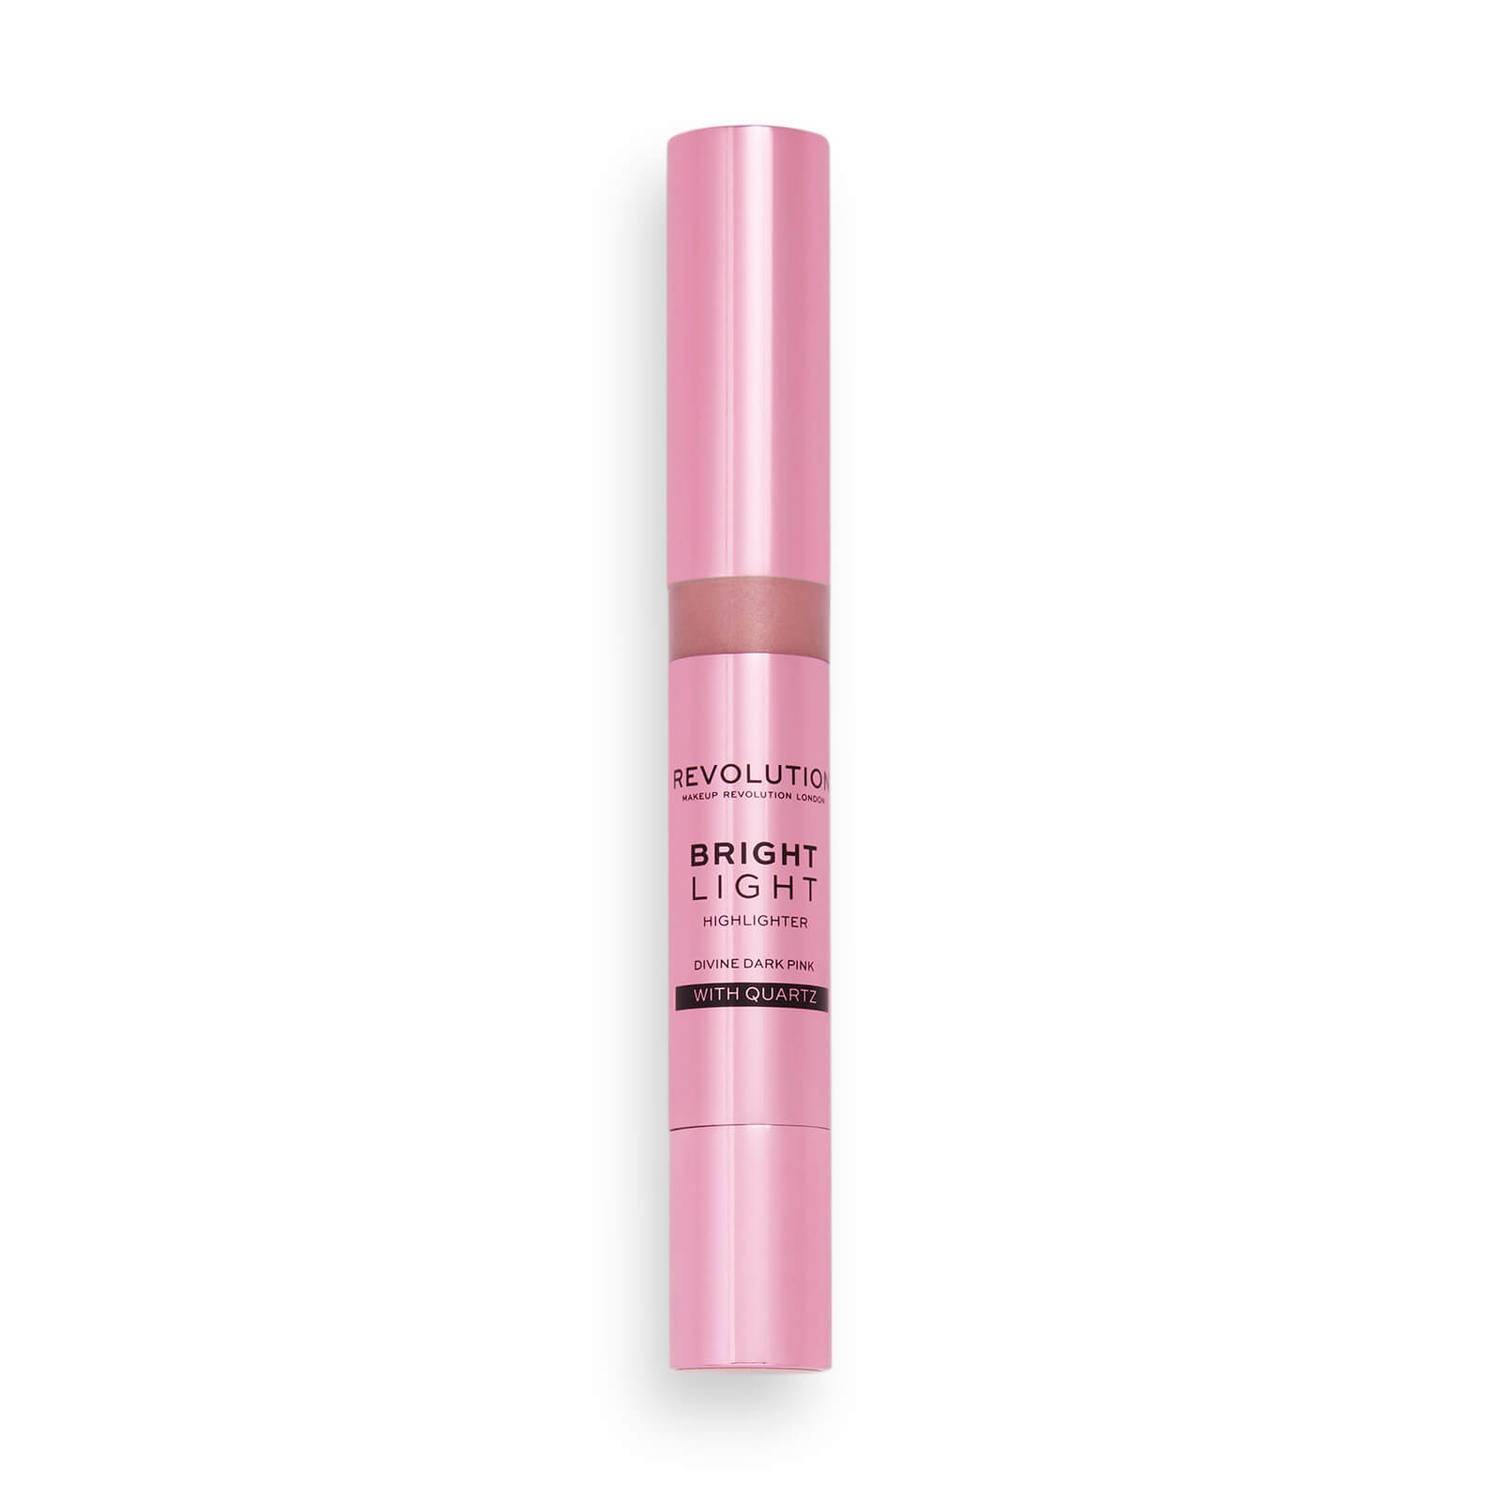 Хайлайтер Makeup Revolution Bright Light Highlighter 3ml, Dark Pink пуховка с блёстками для естественного сияния кожи shine bright